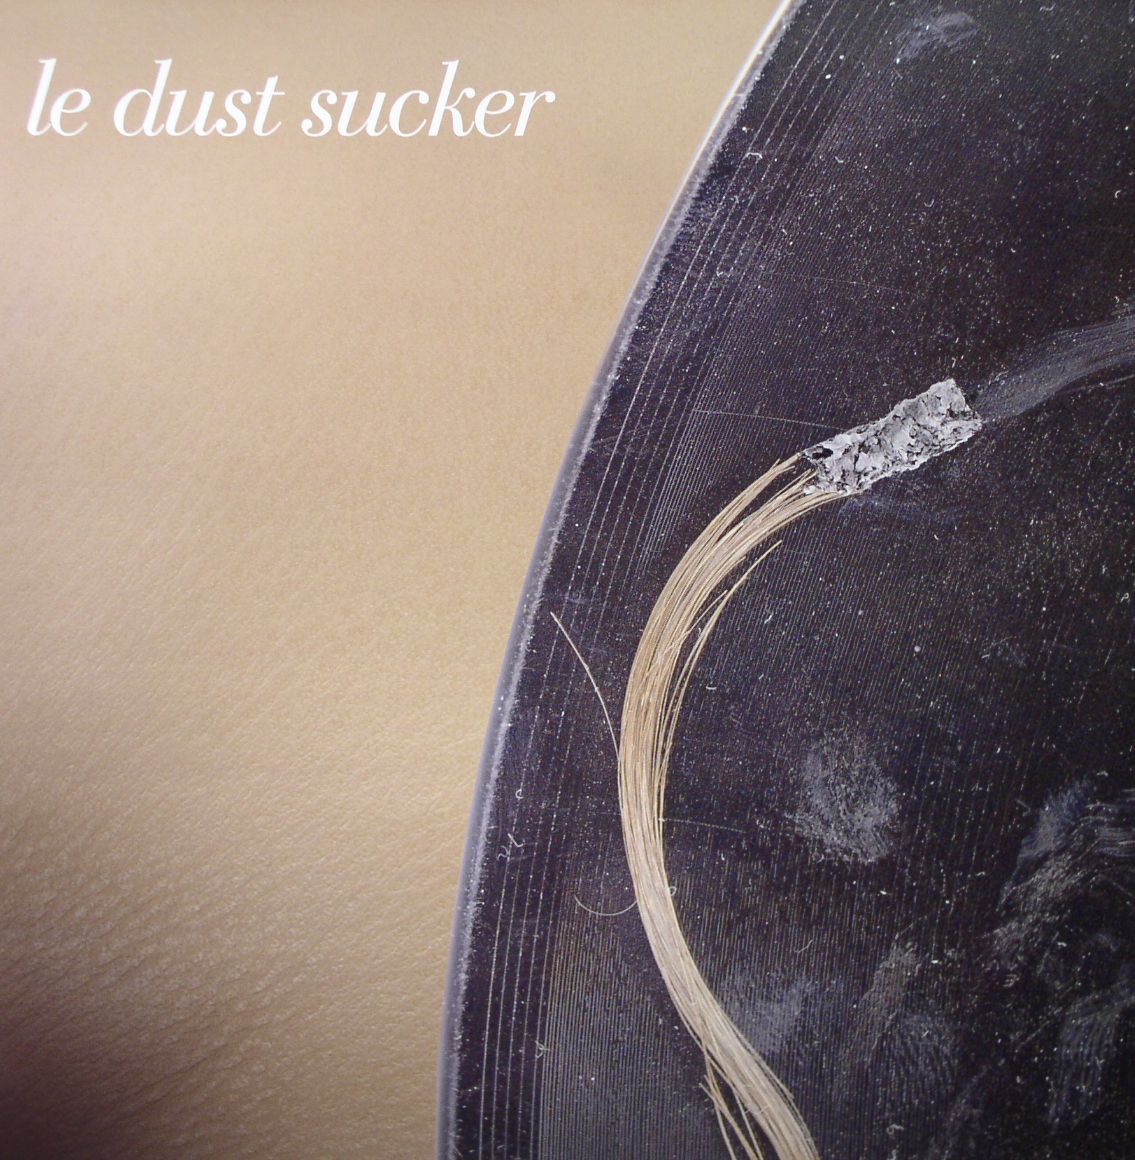 LE DUST SUCKER - Le Dust Sucker